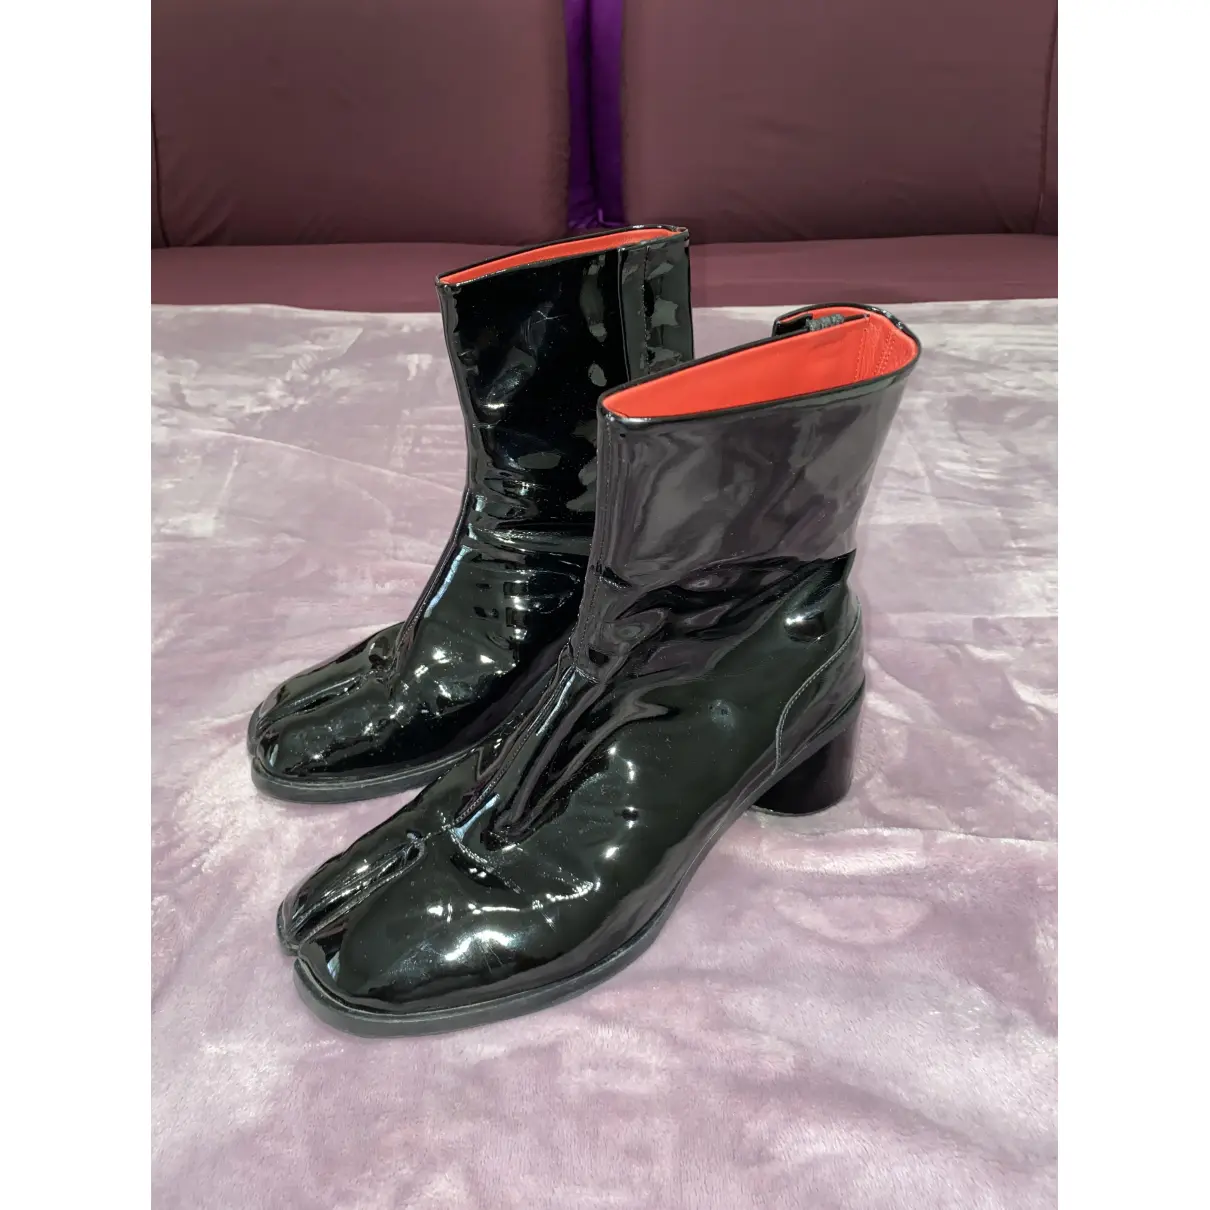 Buy Maison Martin Margiela Tabi patent leather boots online